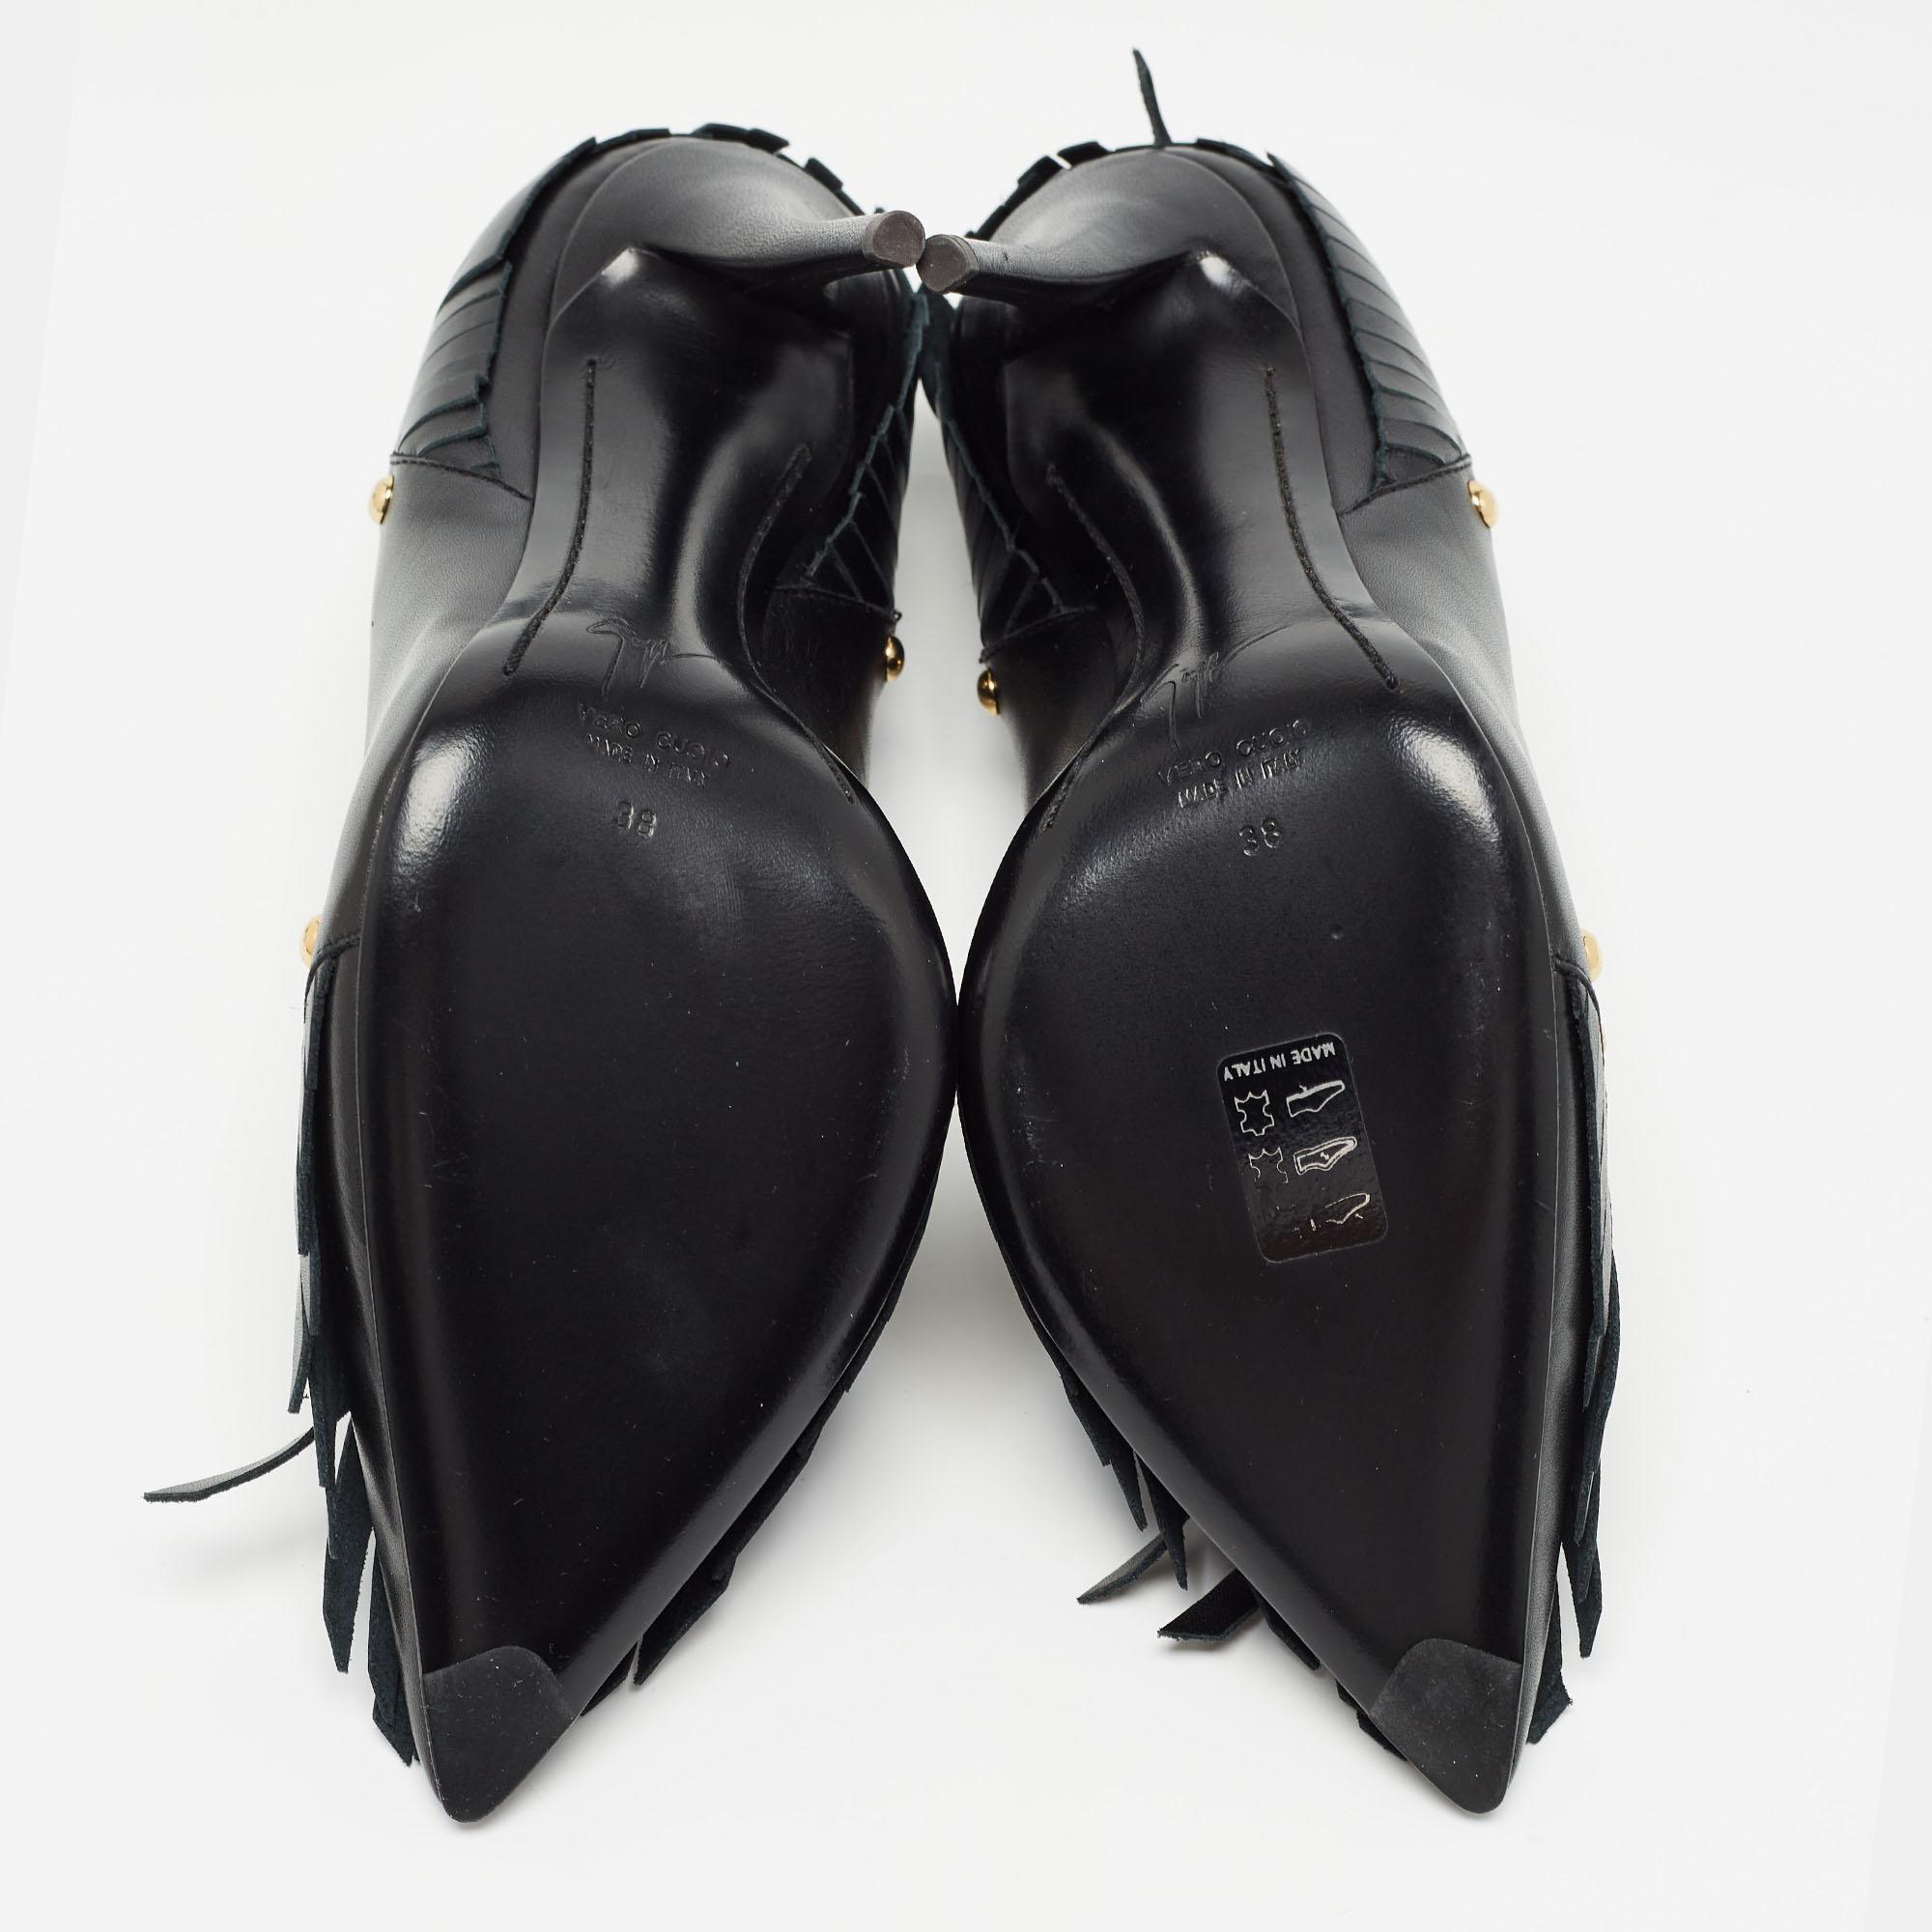 Giuseppe Zanotti Black Leather Studded Fringe Pumps Size 38 For Sale 2